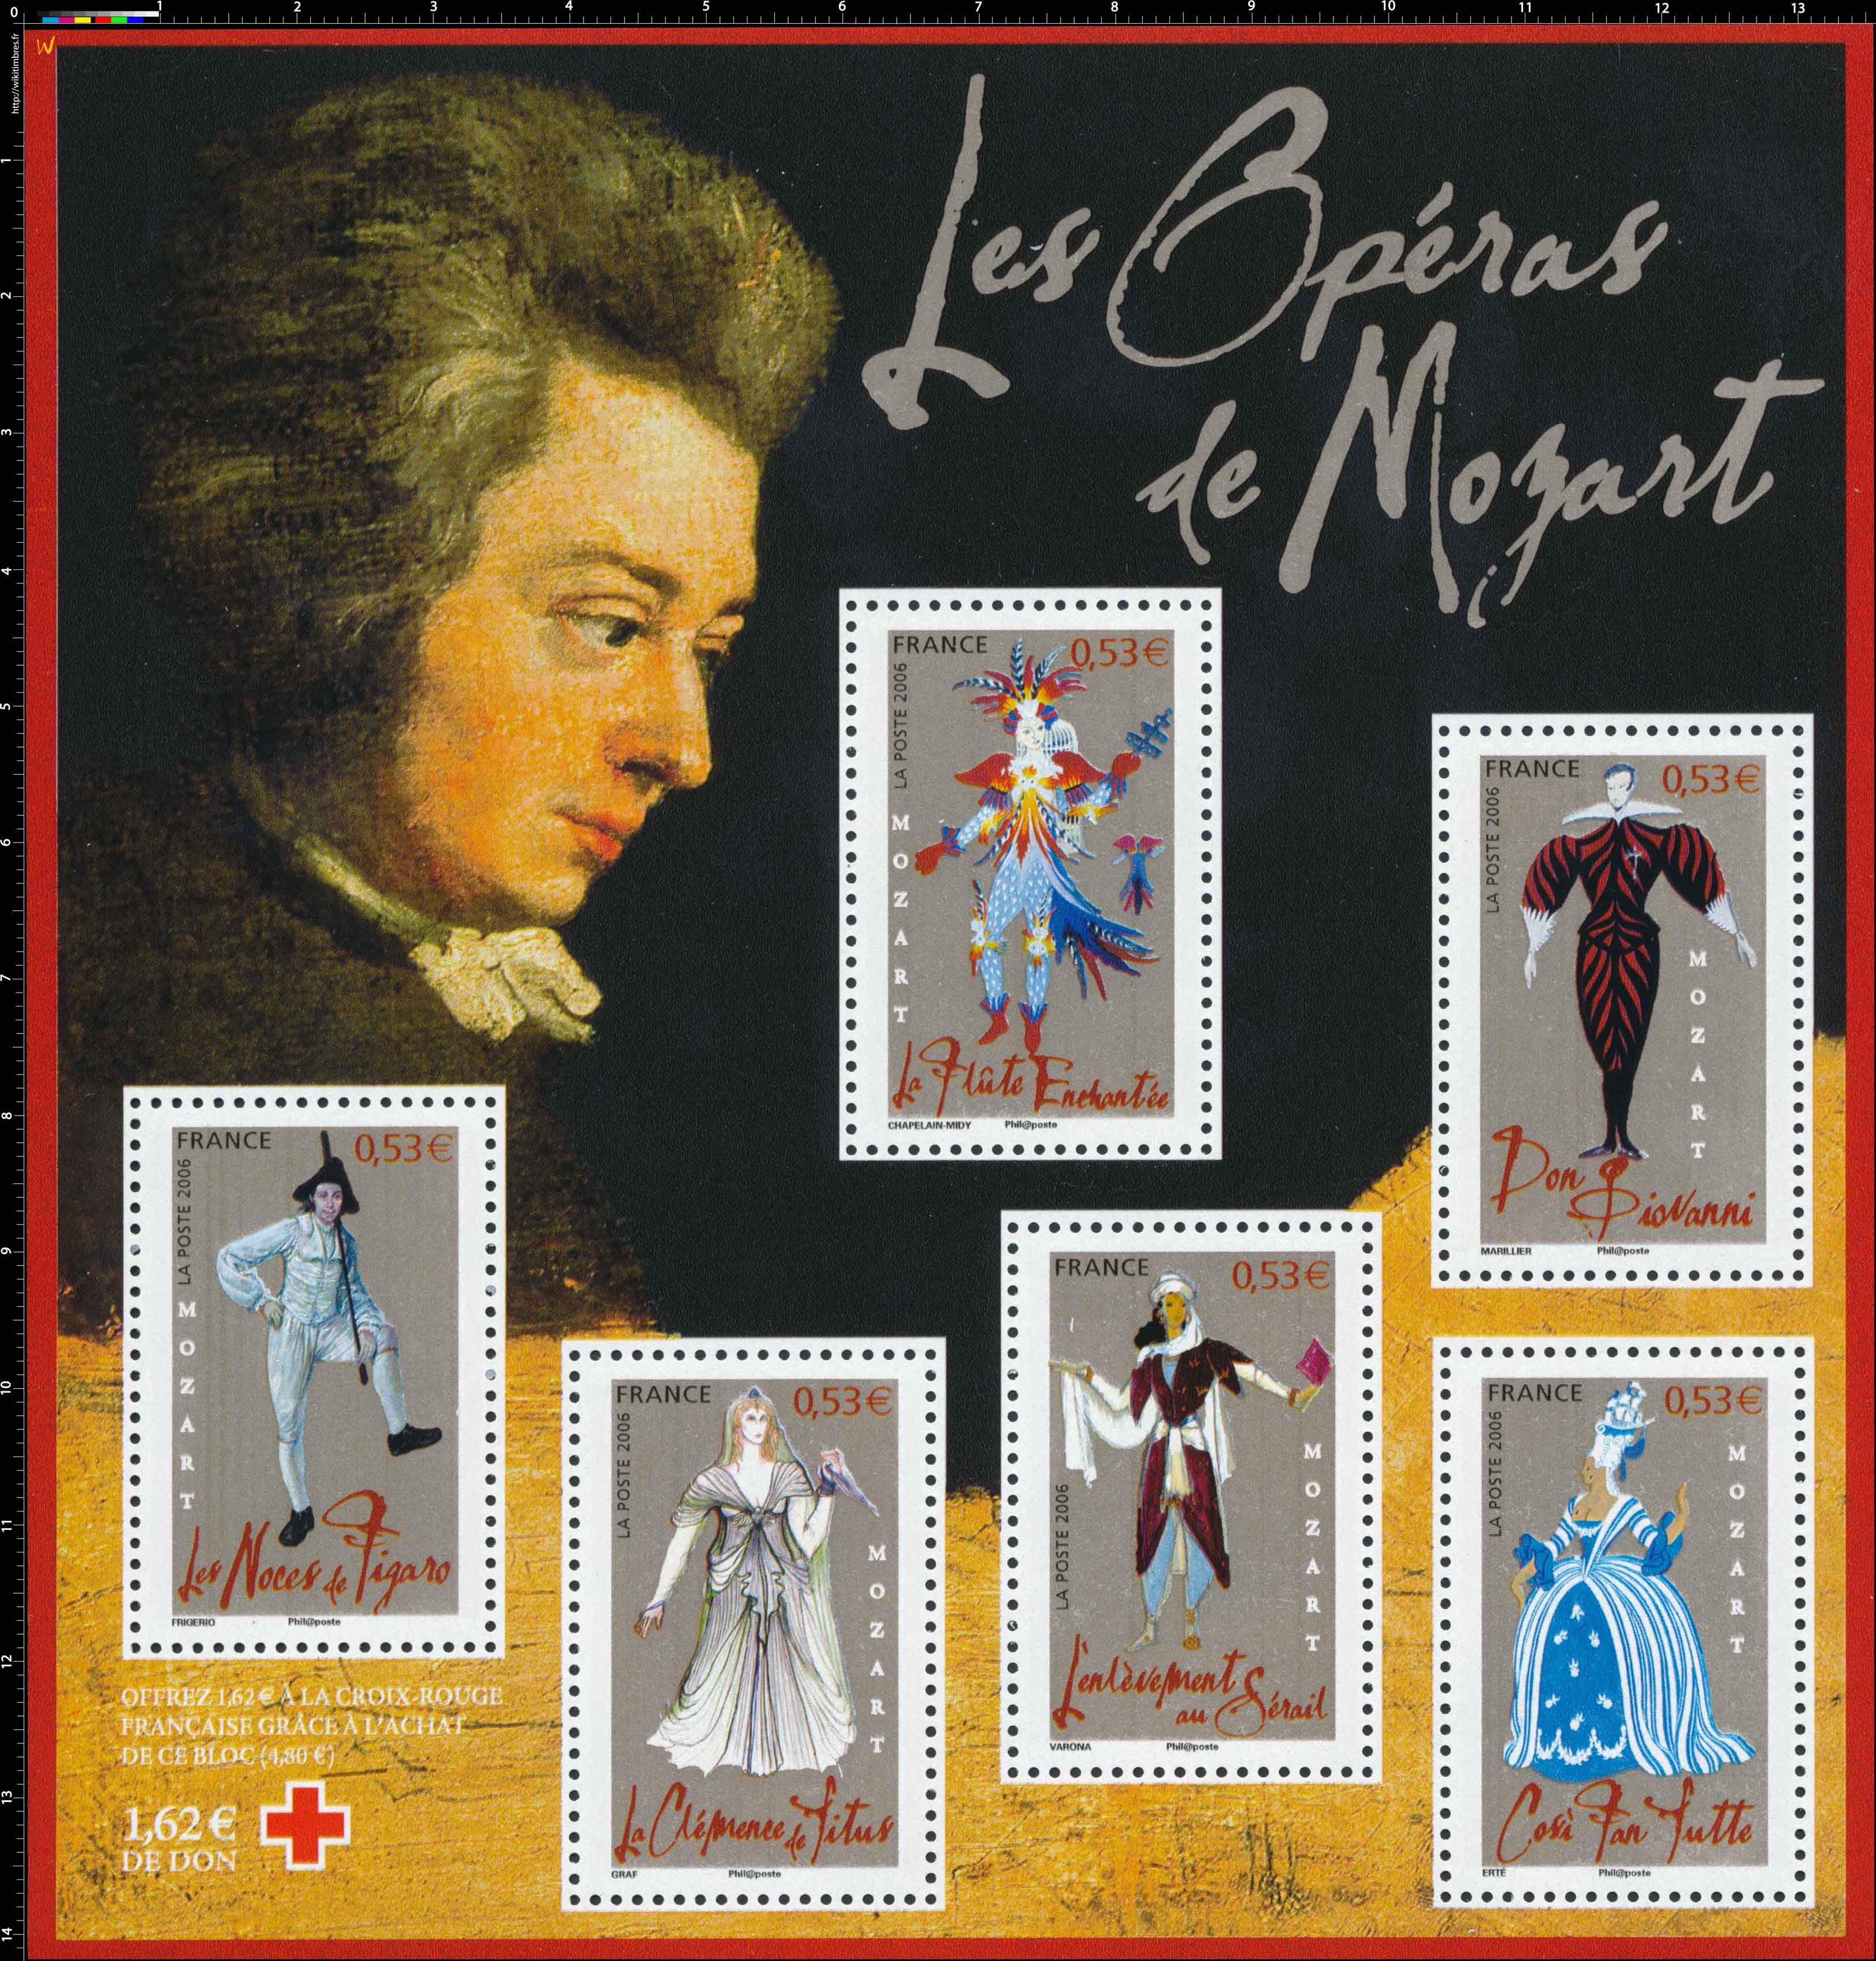 Les opéras de Mozart